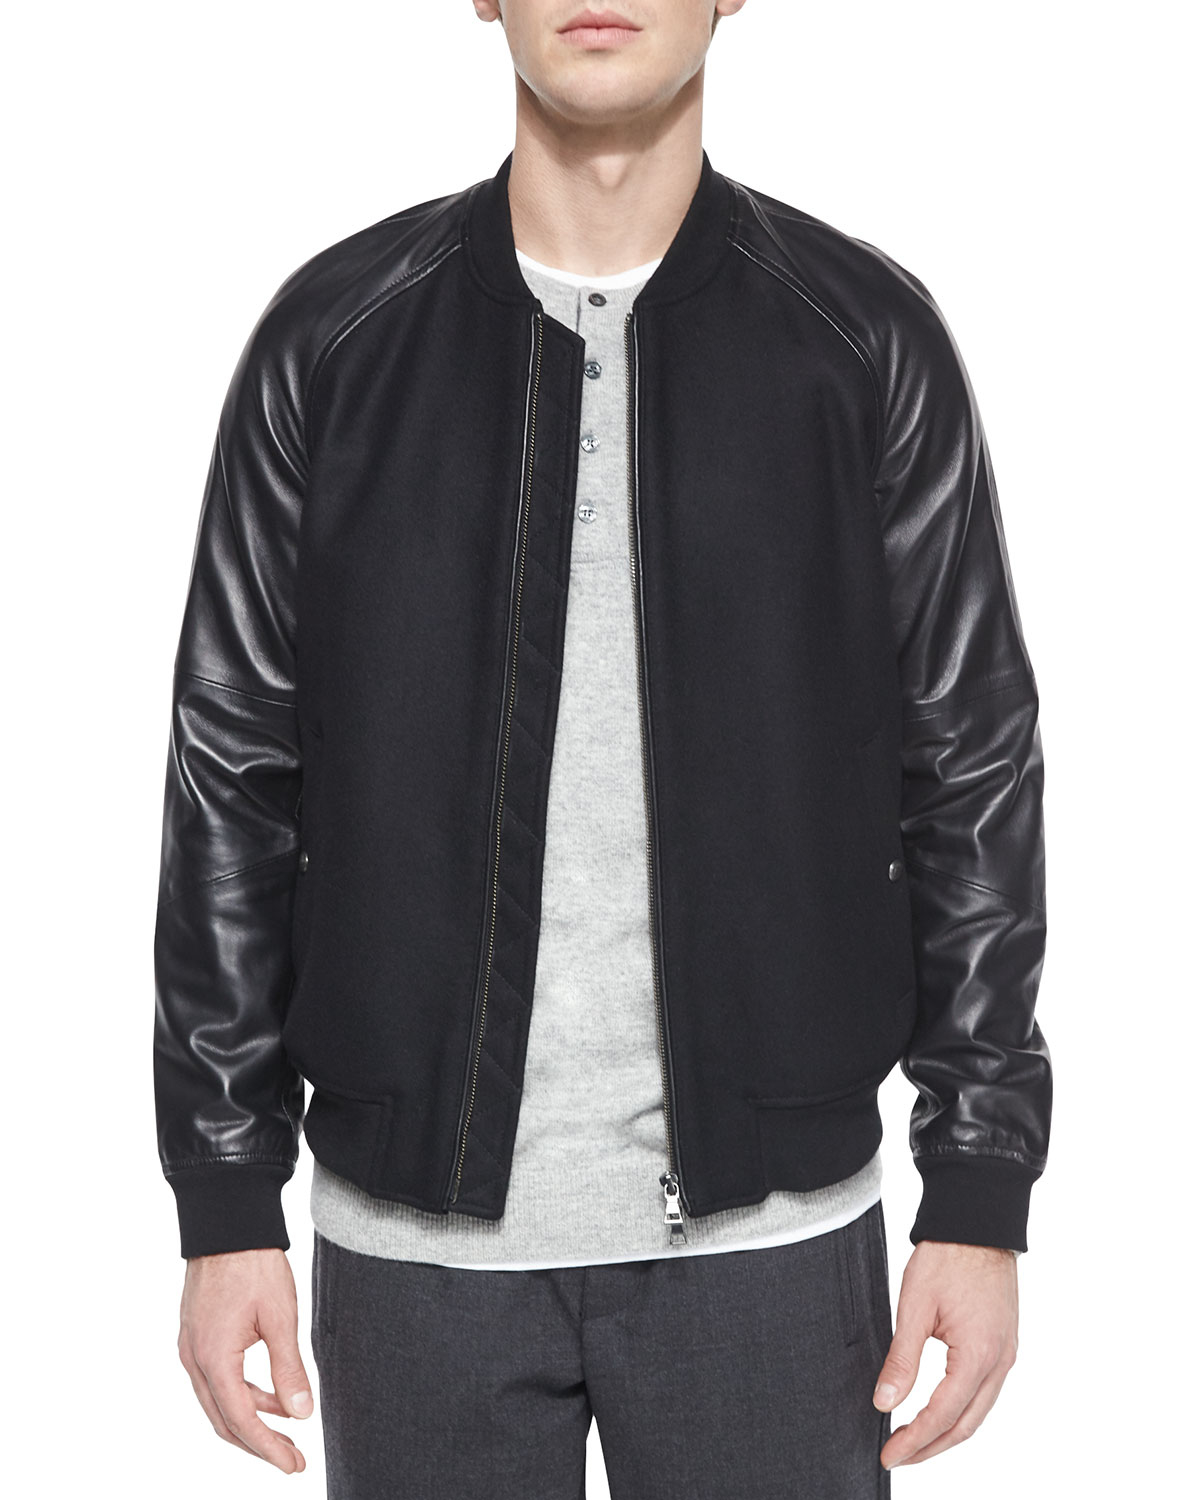 Vince Leather-sleeve Bomber Jacket in Black for Men - Lyst